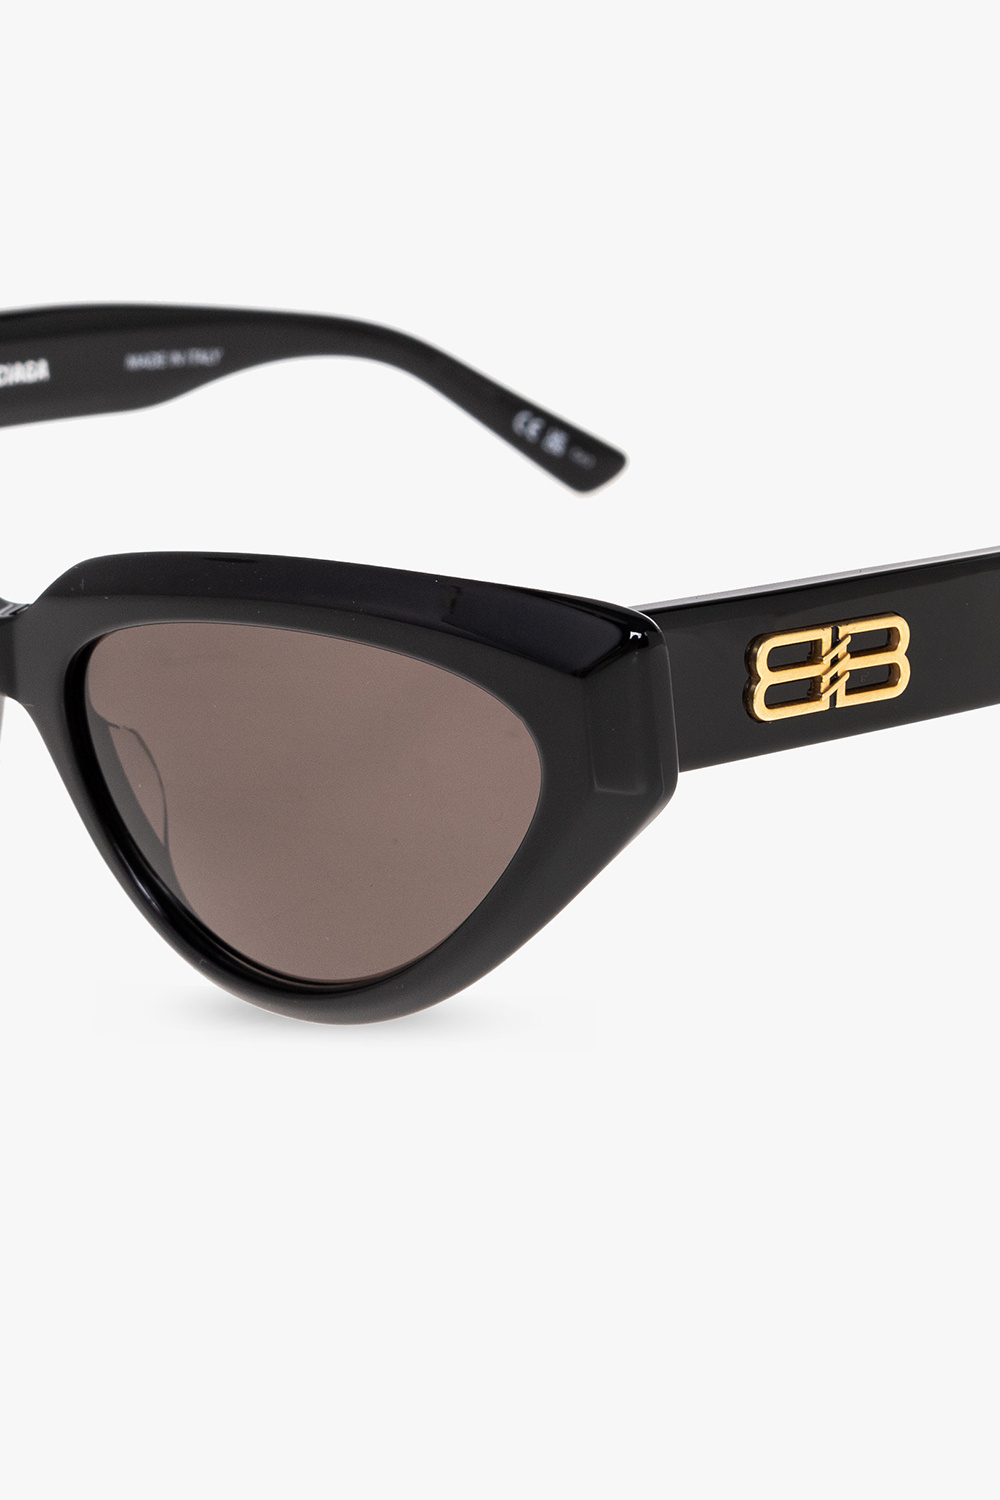 Balenciaga Alexander McQueen Eyewear AM0275S round-frame sunglasses